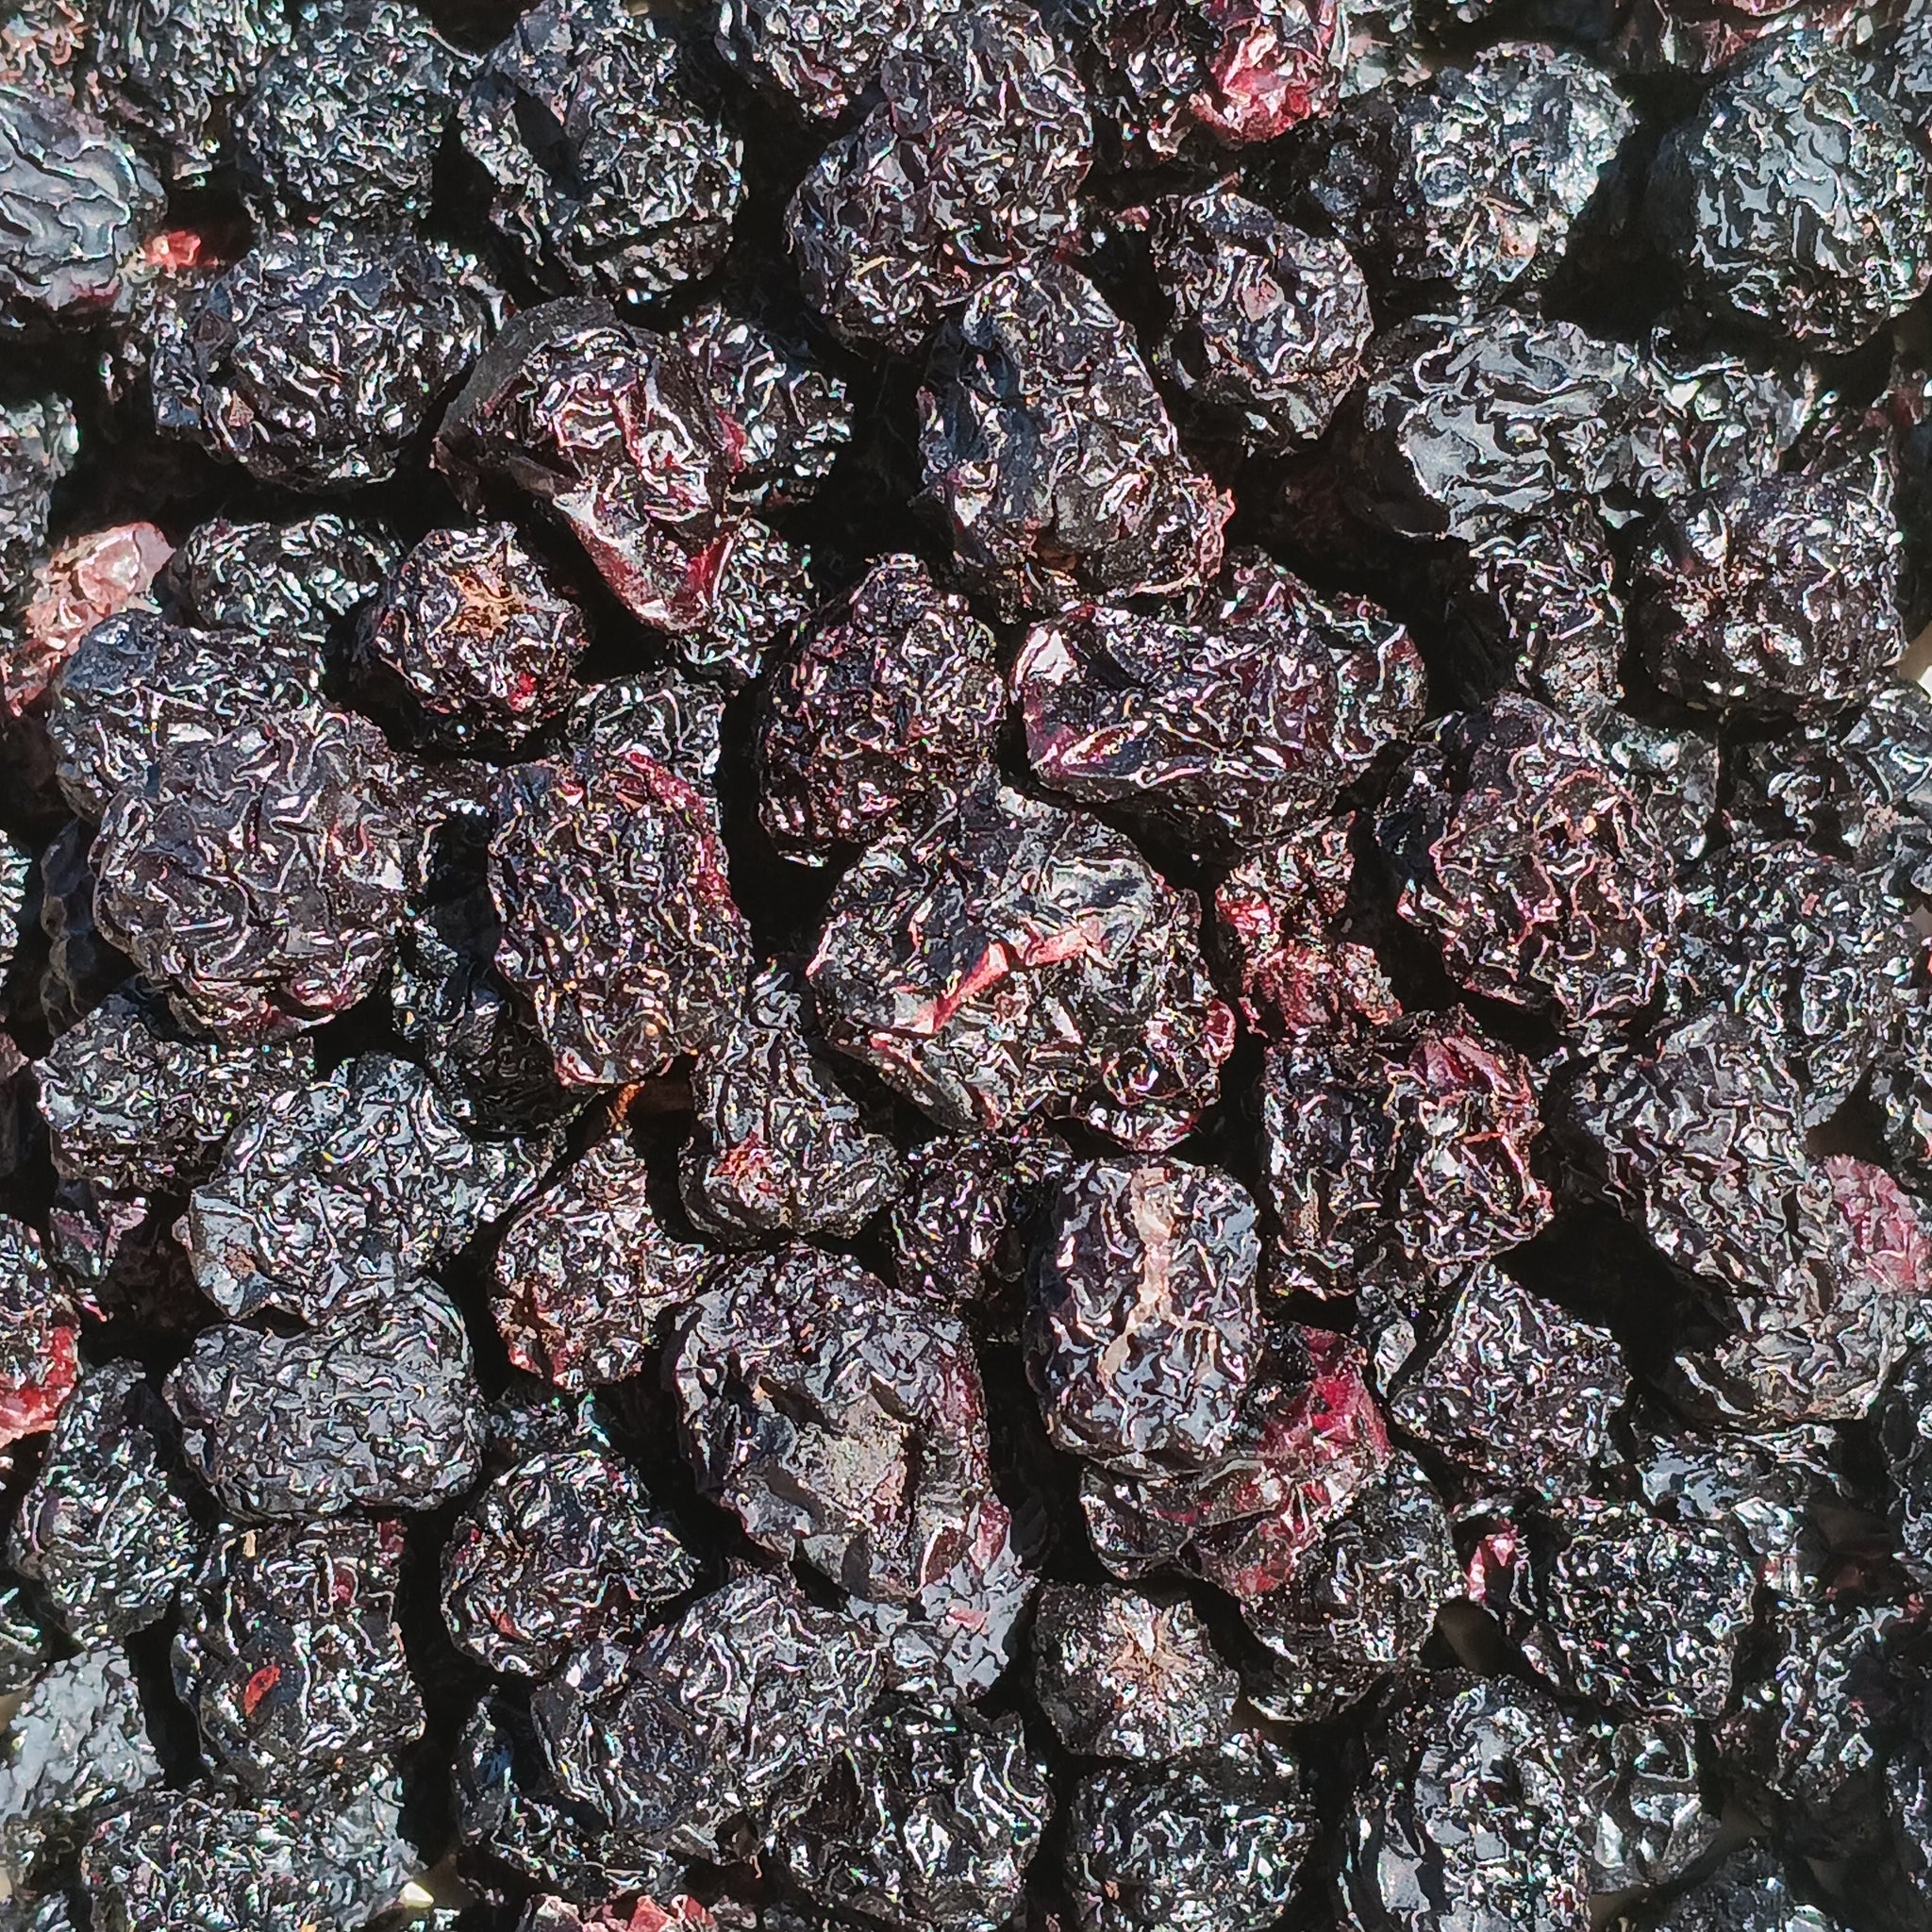 <transcy>Aronie aux fruits noirs (Aronia Melanocarpa)</transcy>